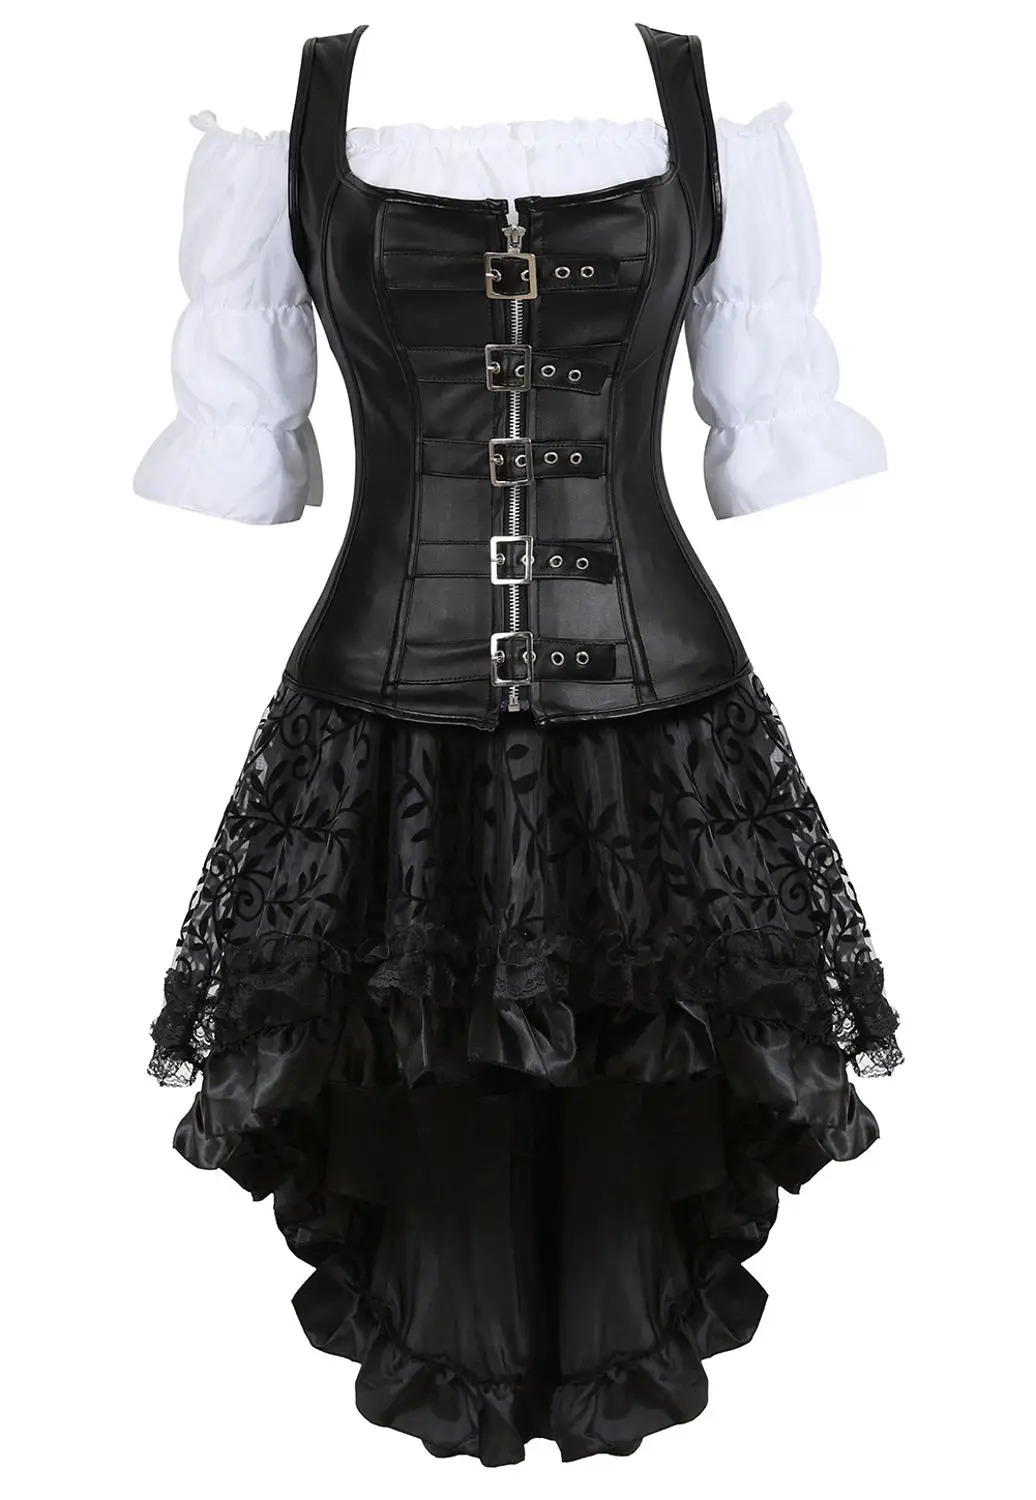 Corset Dress Skirt 3 Piece Leather Corset Steampunk Pirate Lingerie Bustiers Corsetto Irregular Burlesque Plus Size Black